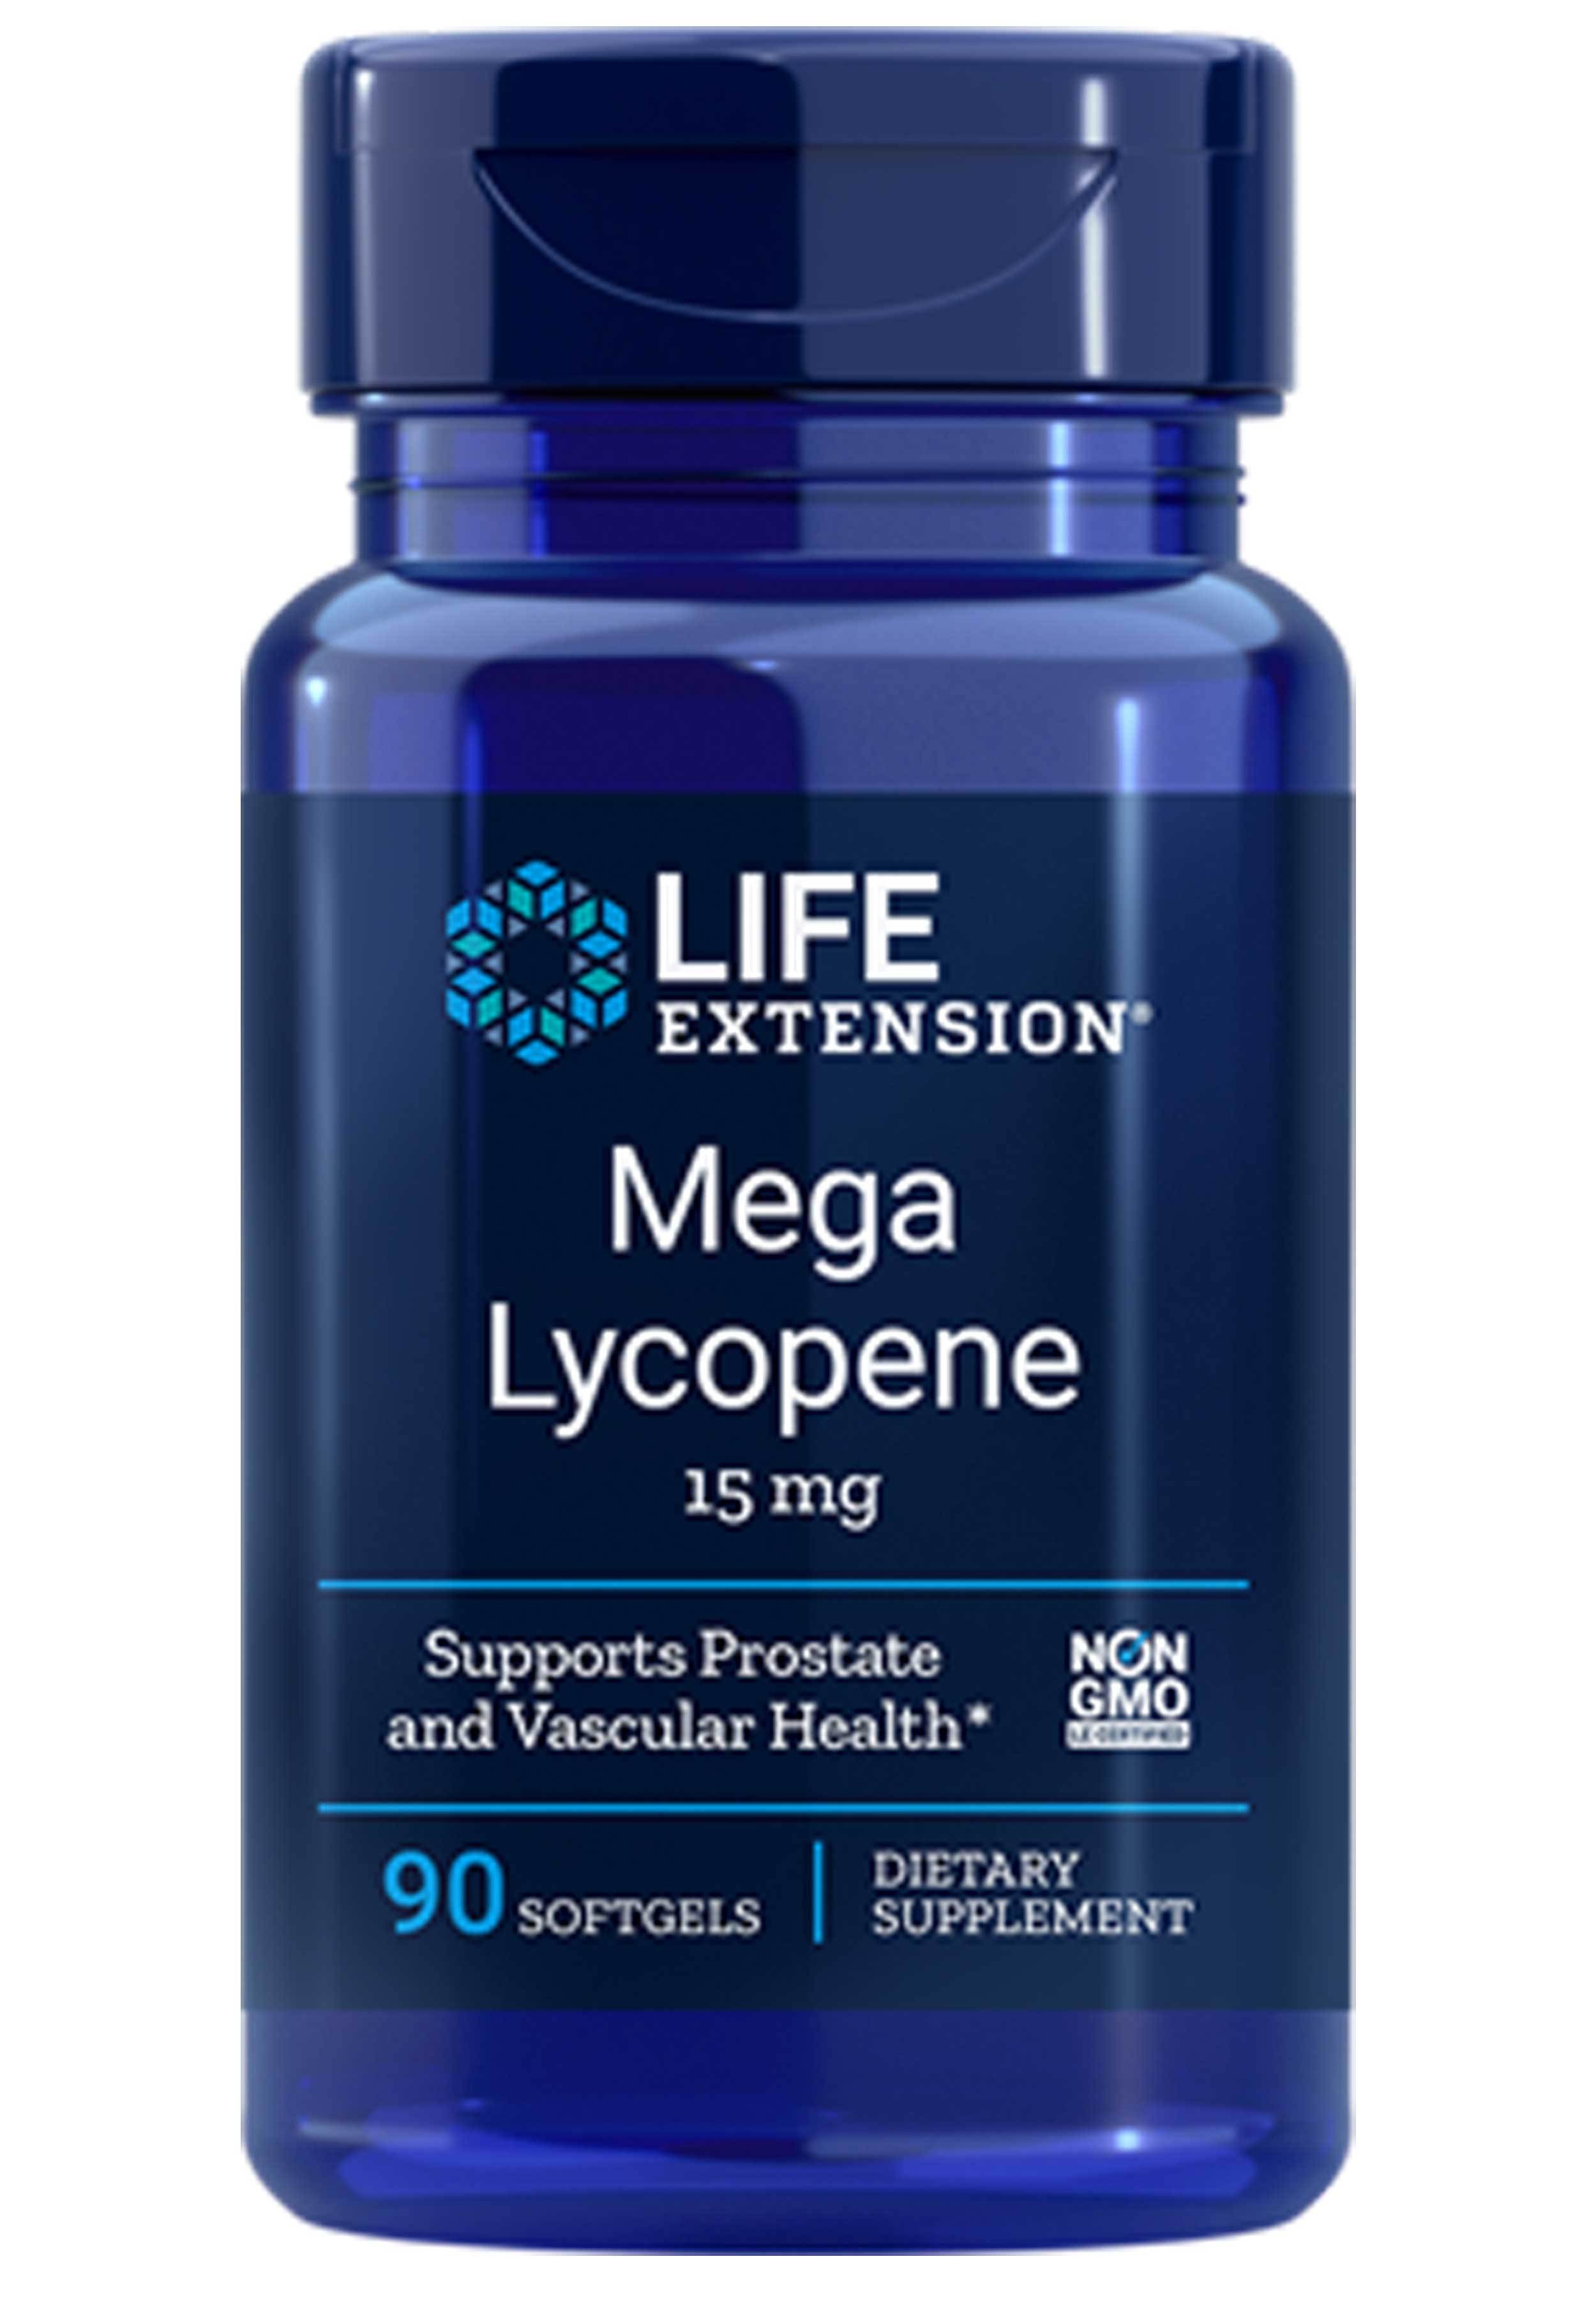 Life Extension Mega Lycopene